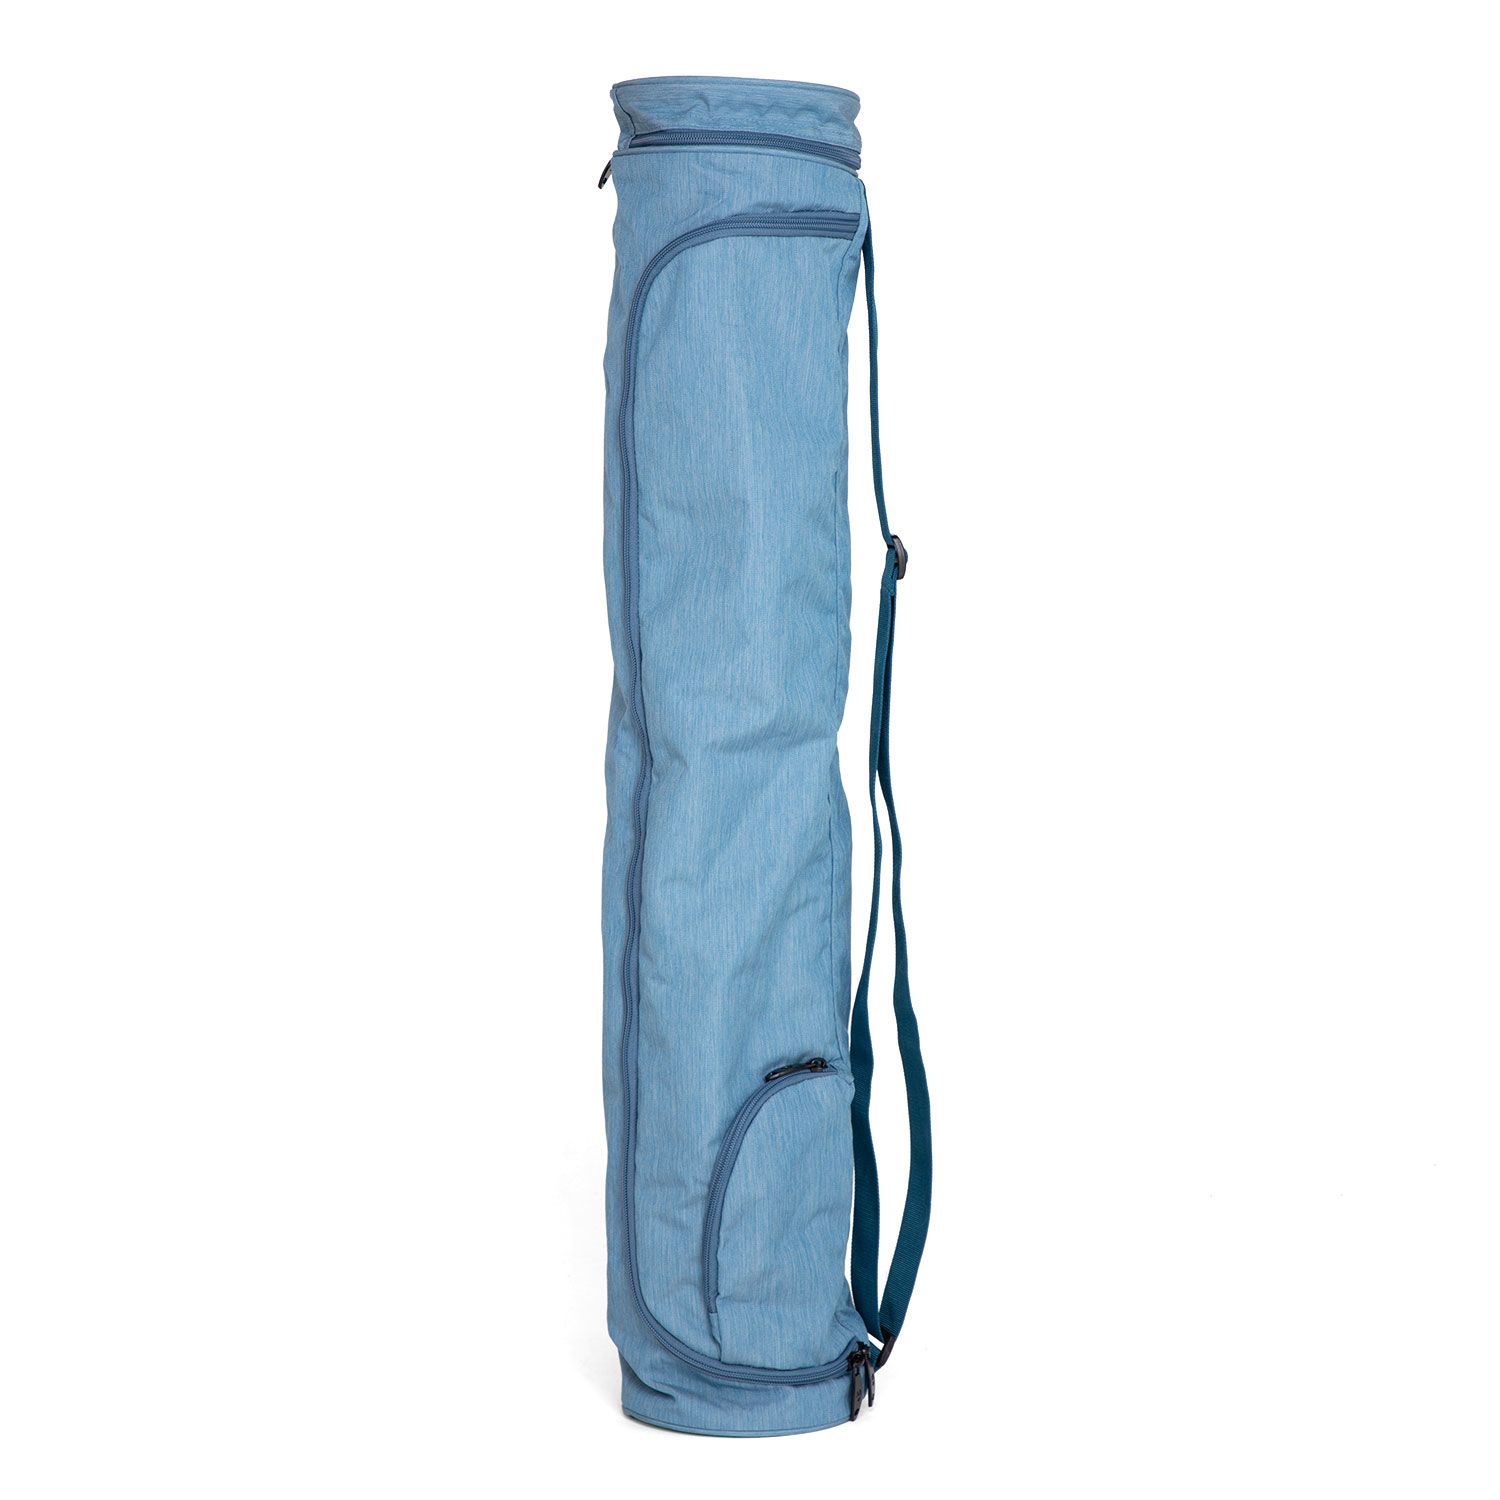 Yogamatten Tasche Asana Bag XXL 80  graublau meliert , Polyester/Polyamide bestickt